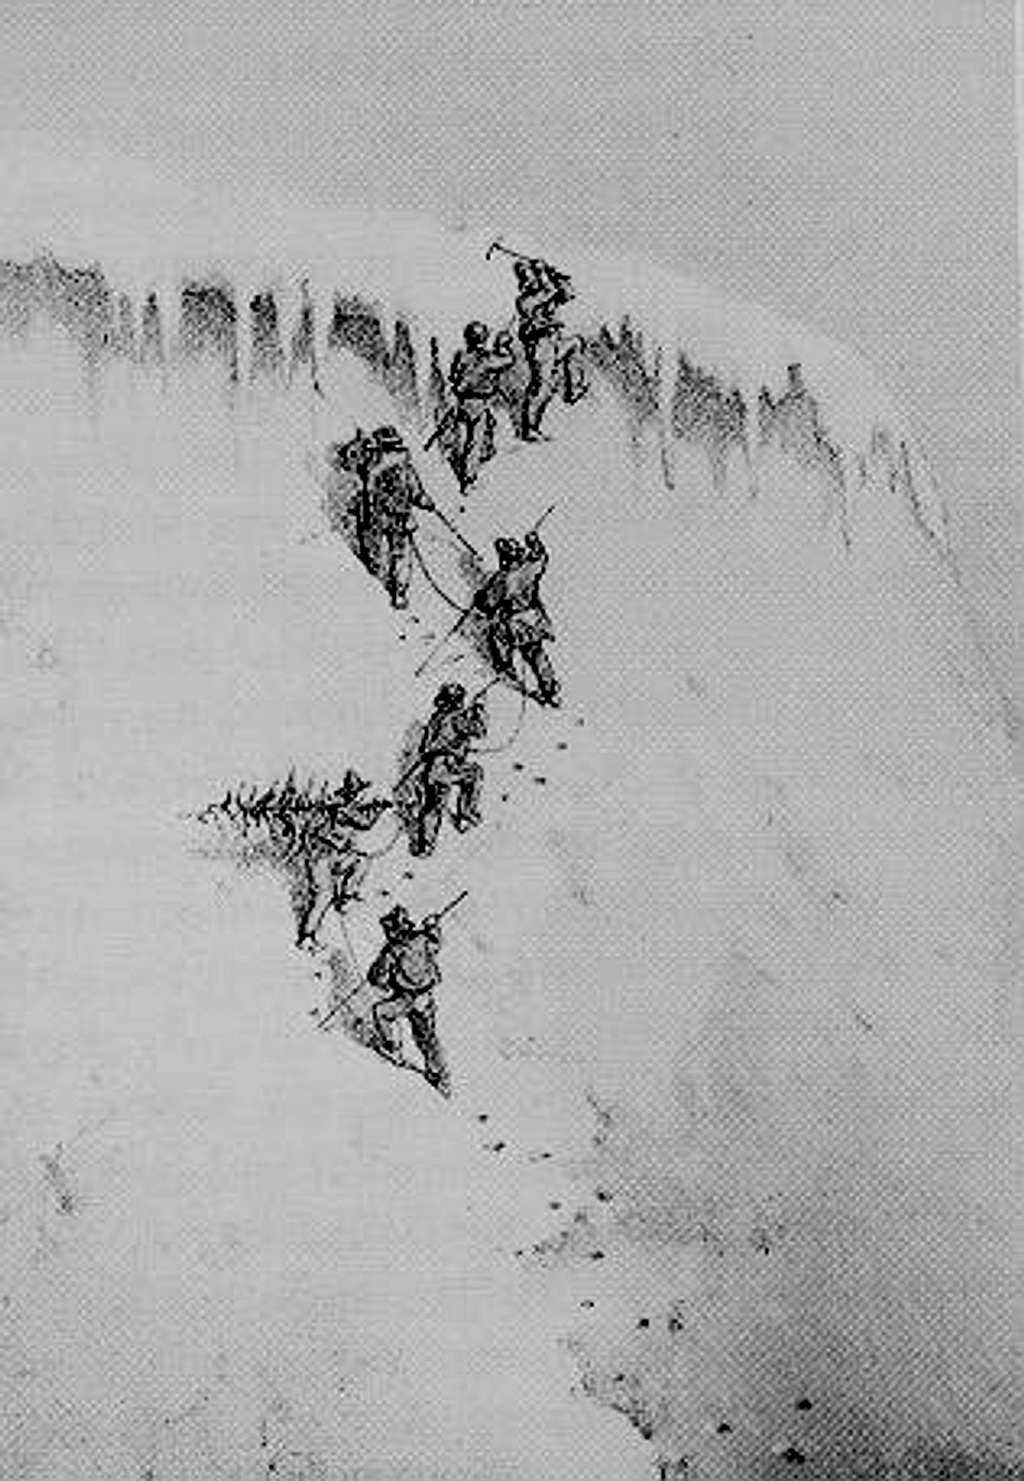 The first ascent of the Wetterhorn